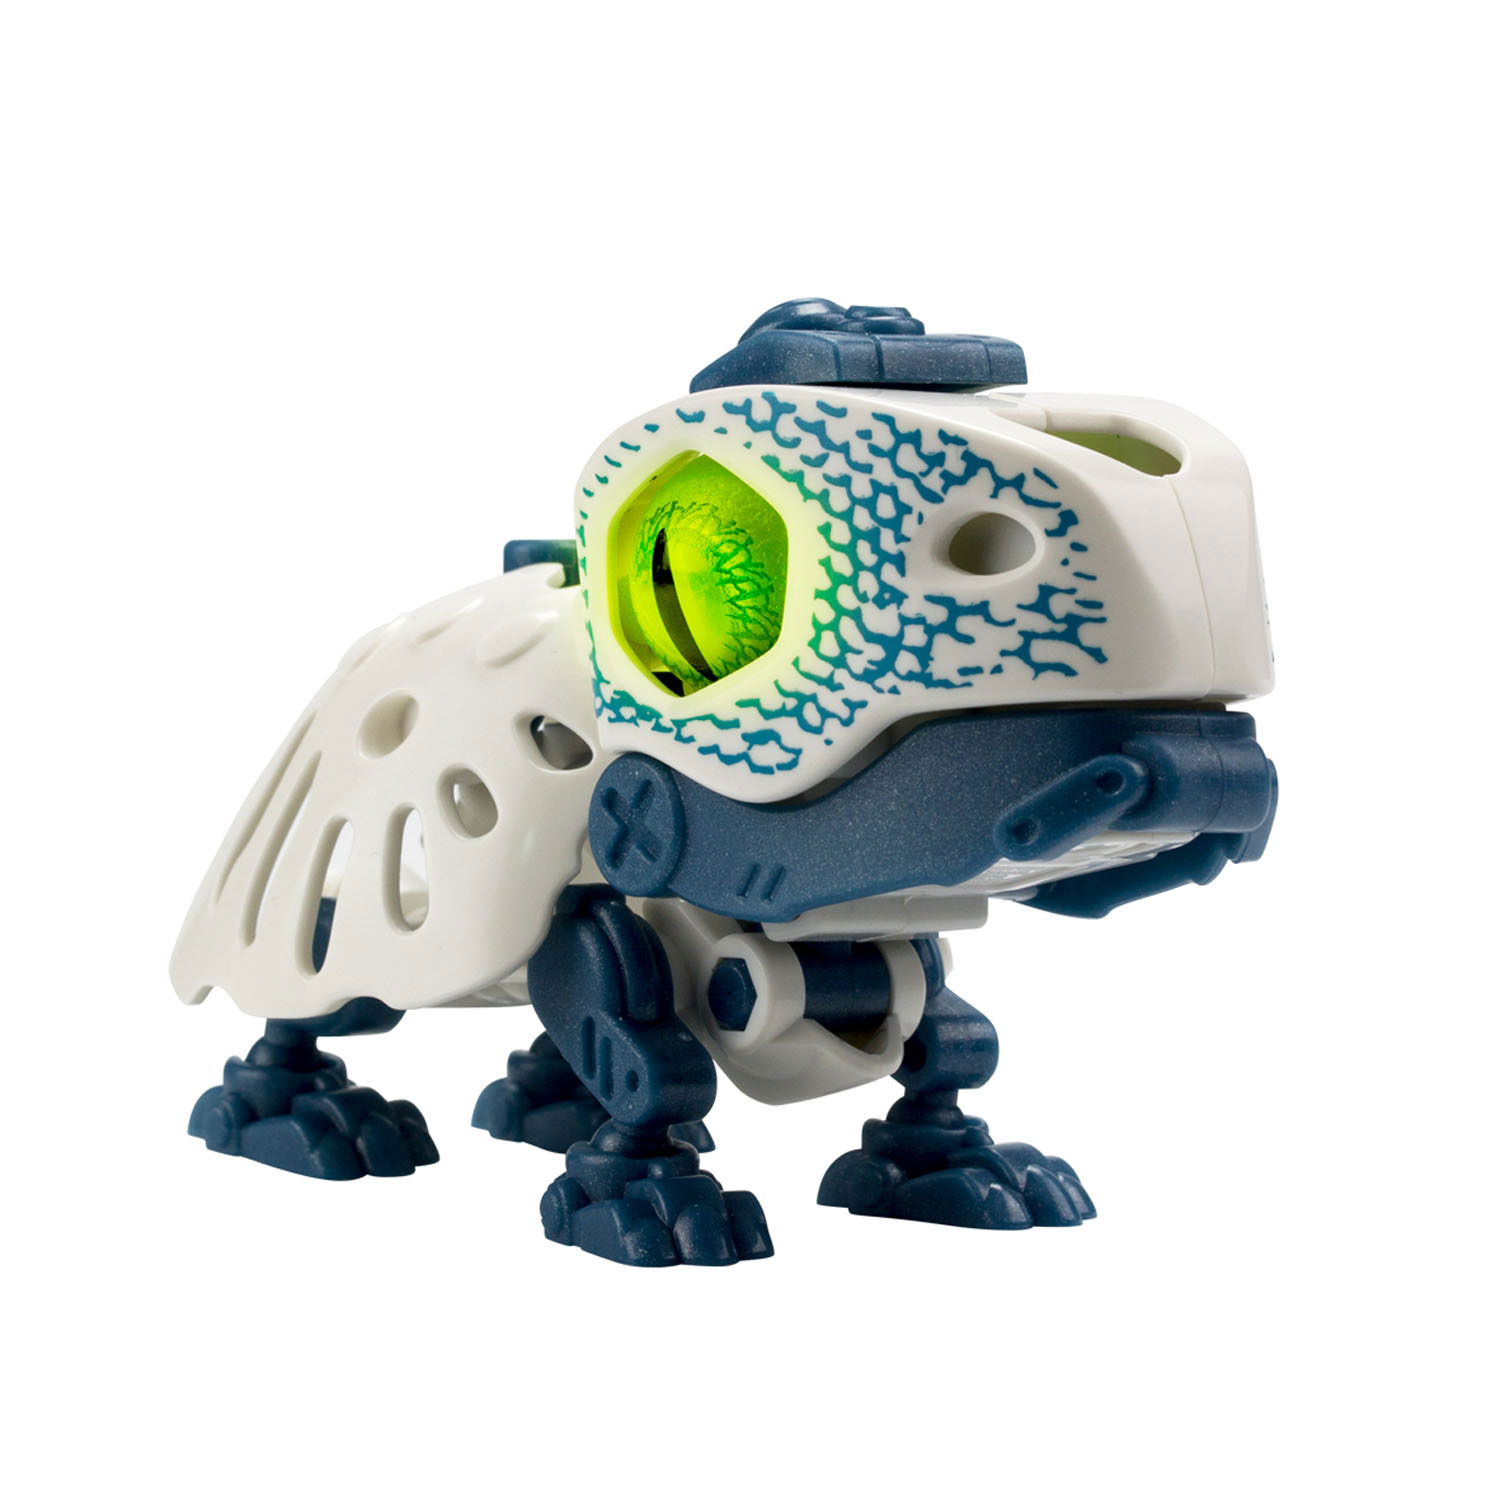 Silverlit Biopod Single Robot Dino